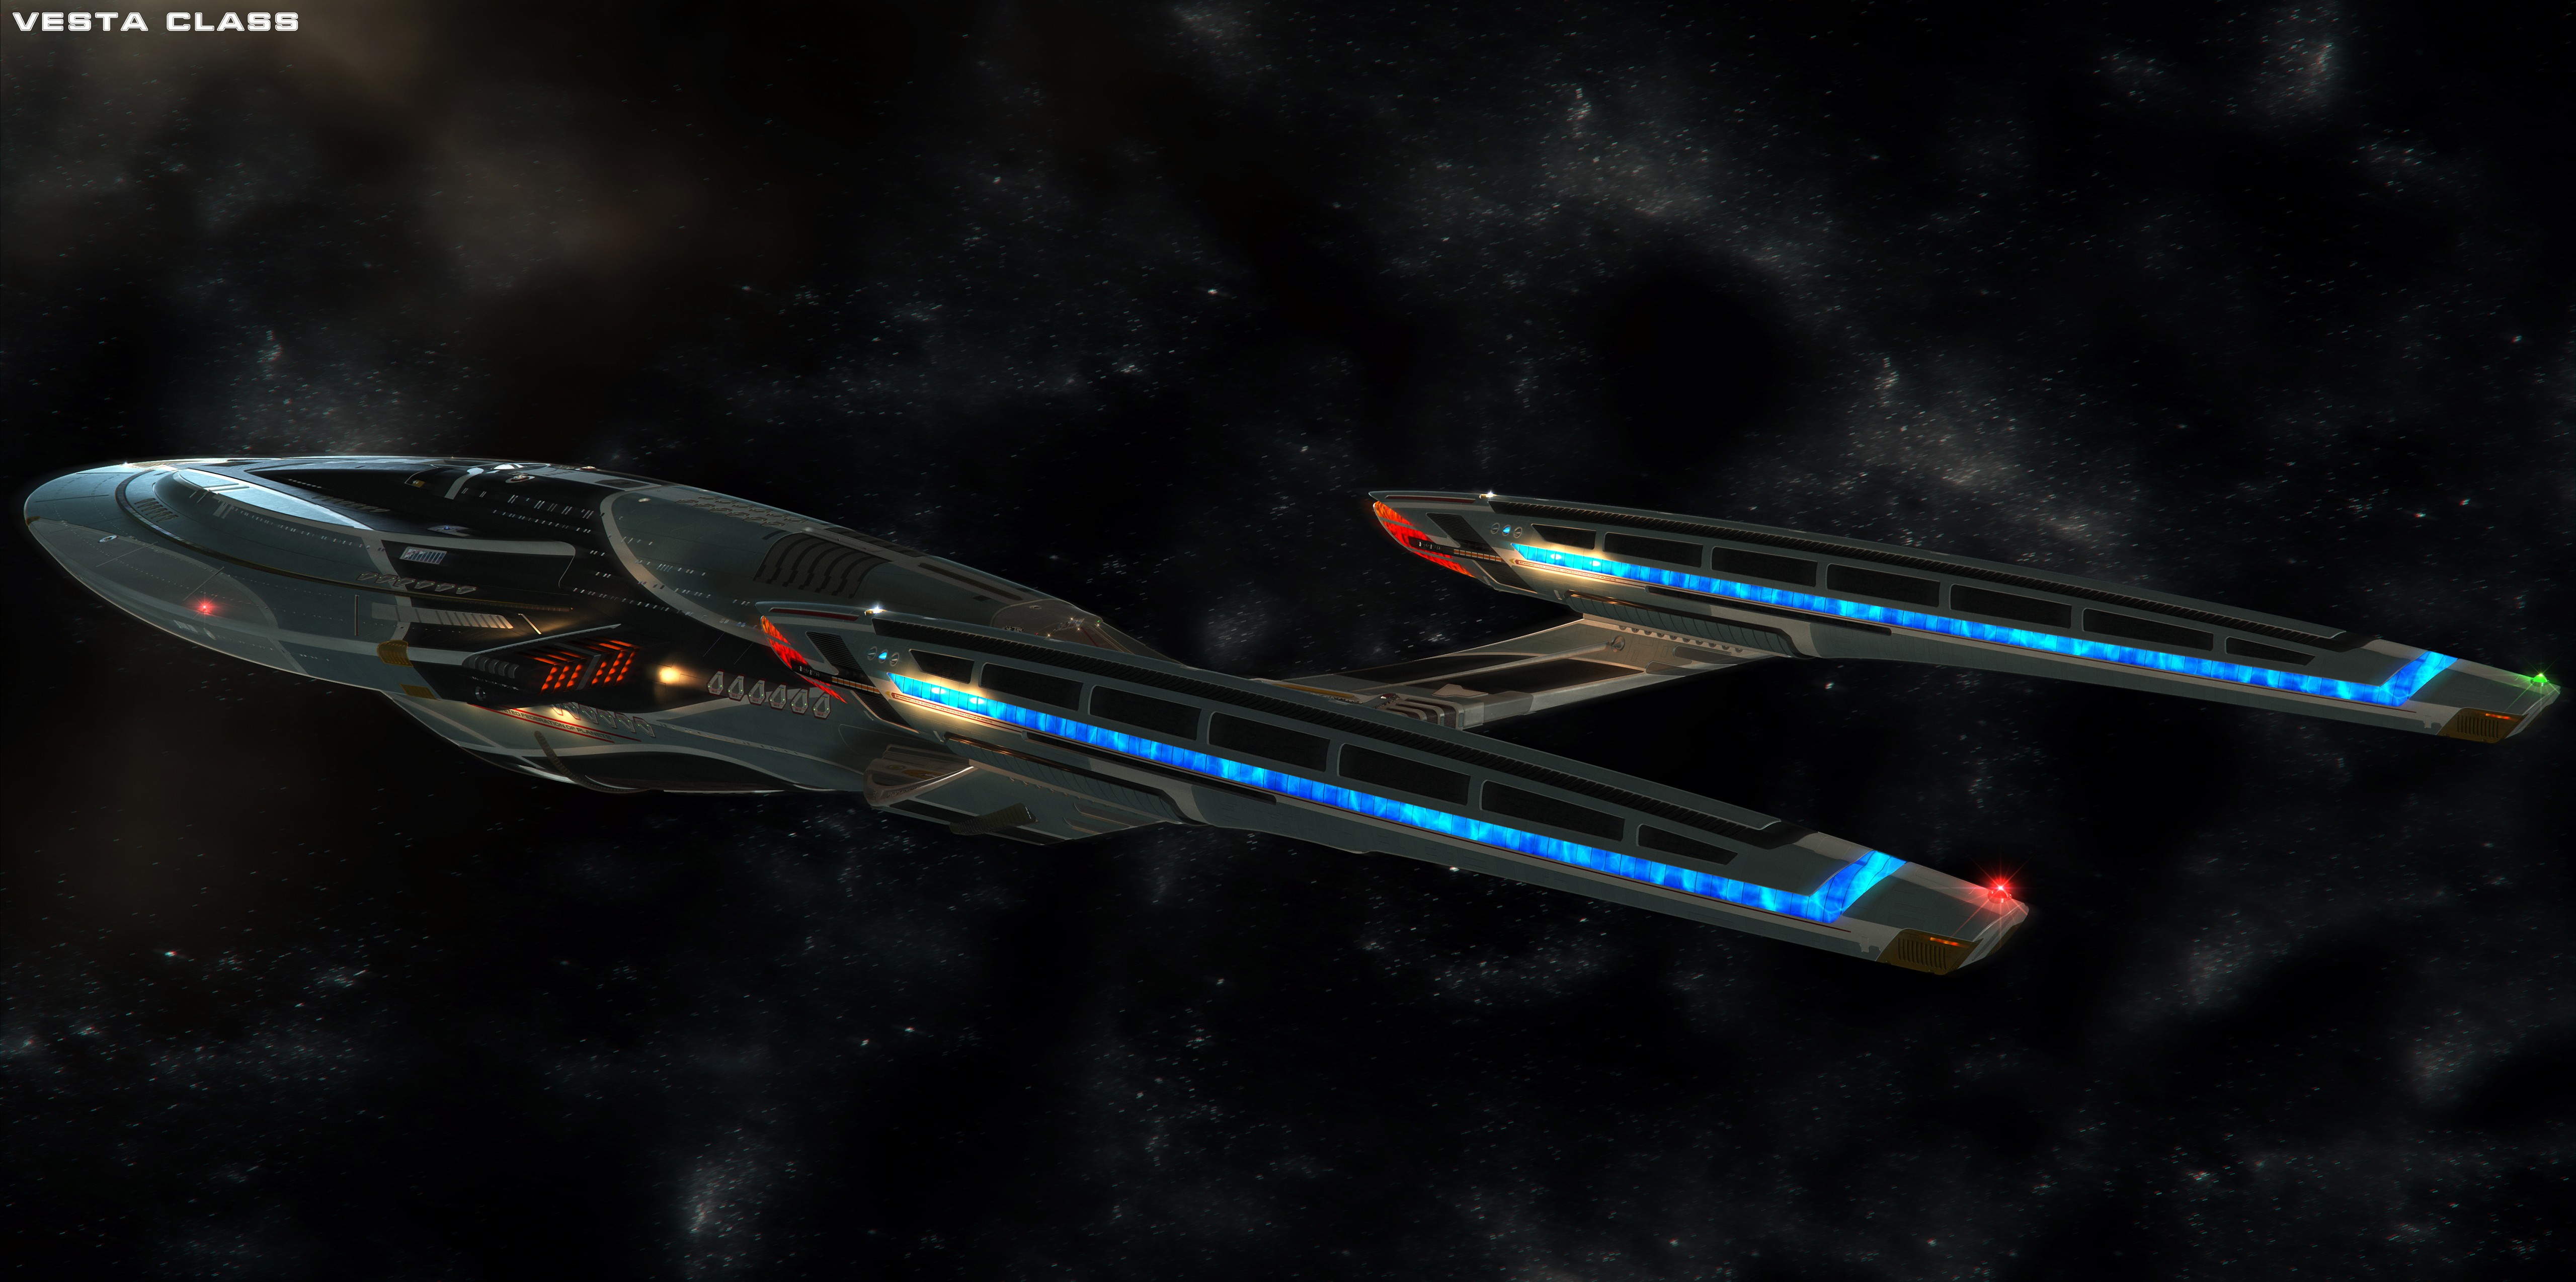 General 5120x2548 Star Trek spaceship CGI fan art science fiction digital art vehicle Star Trek Ships